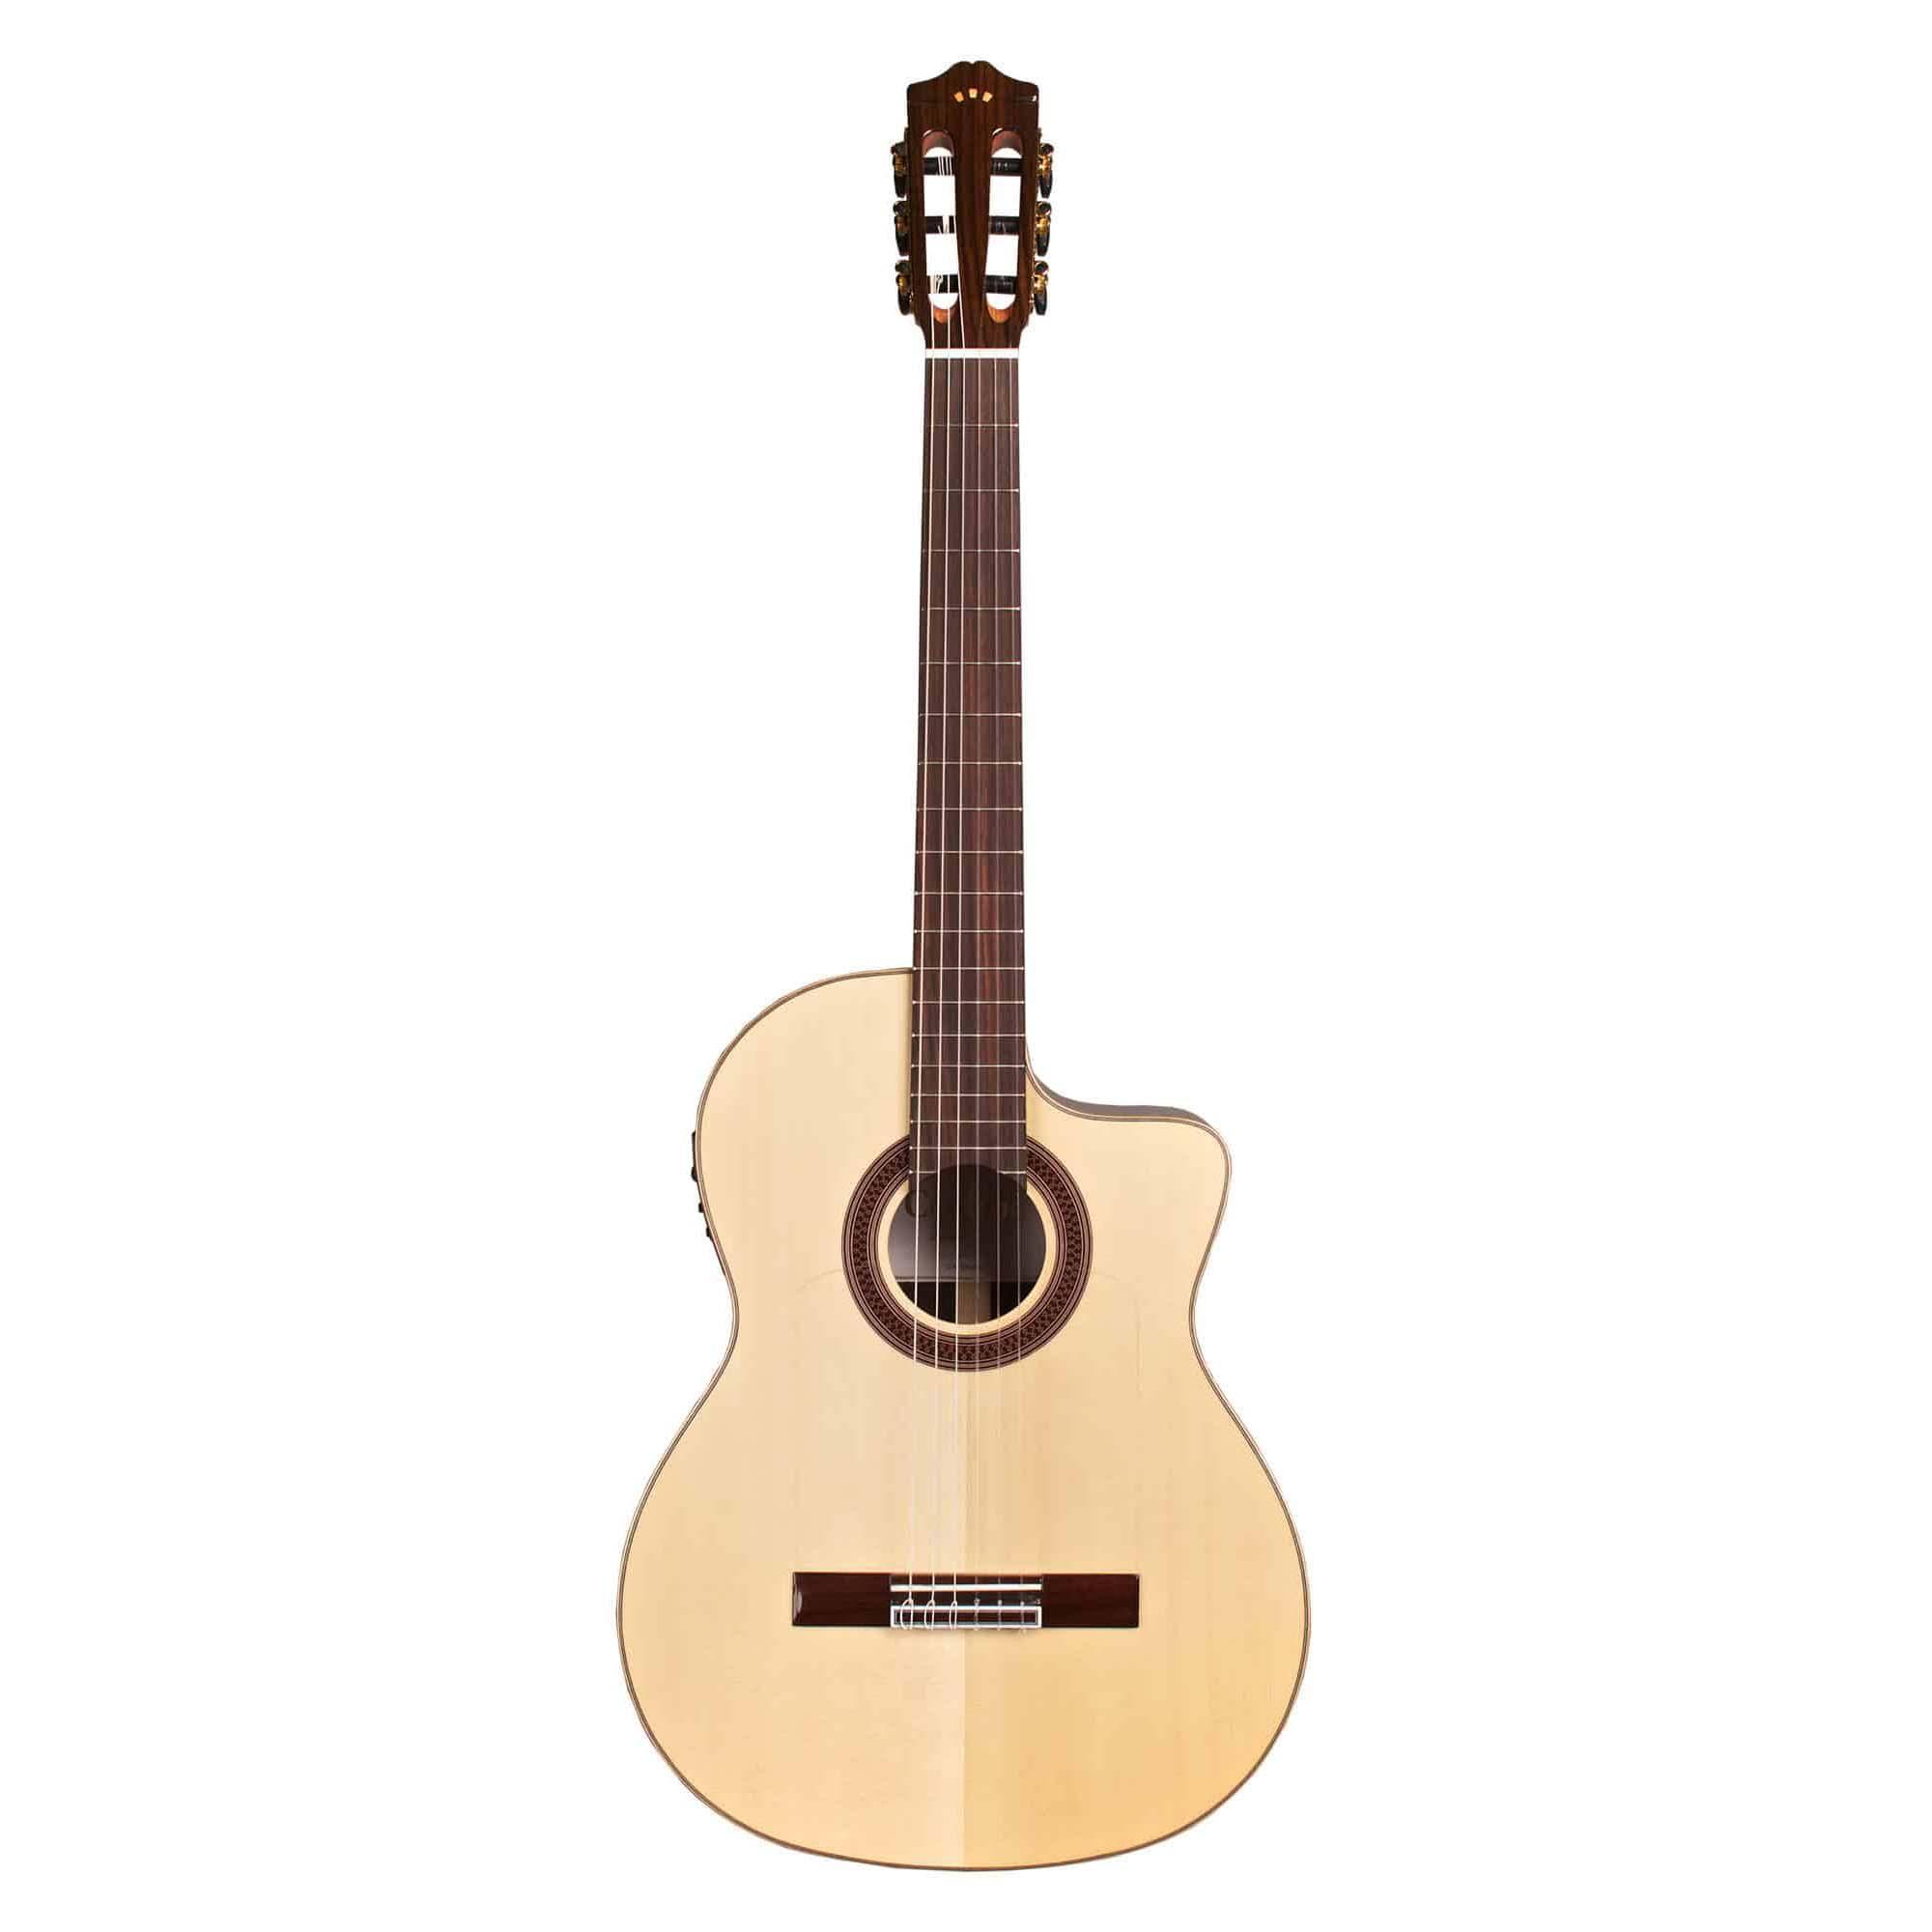 Cordoba GK Studio Limited Solid Spruce Top Ziricote Cutaway Acoustic Electic Guitar - Guitars - Classical by Cordoba at Muso's Stuff